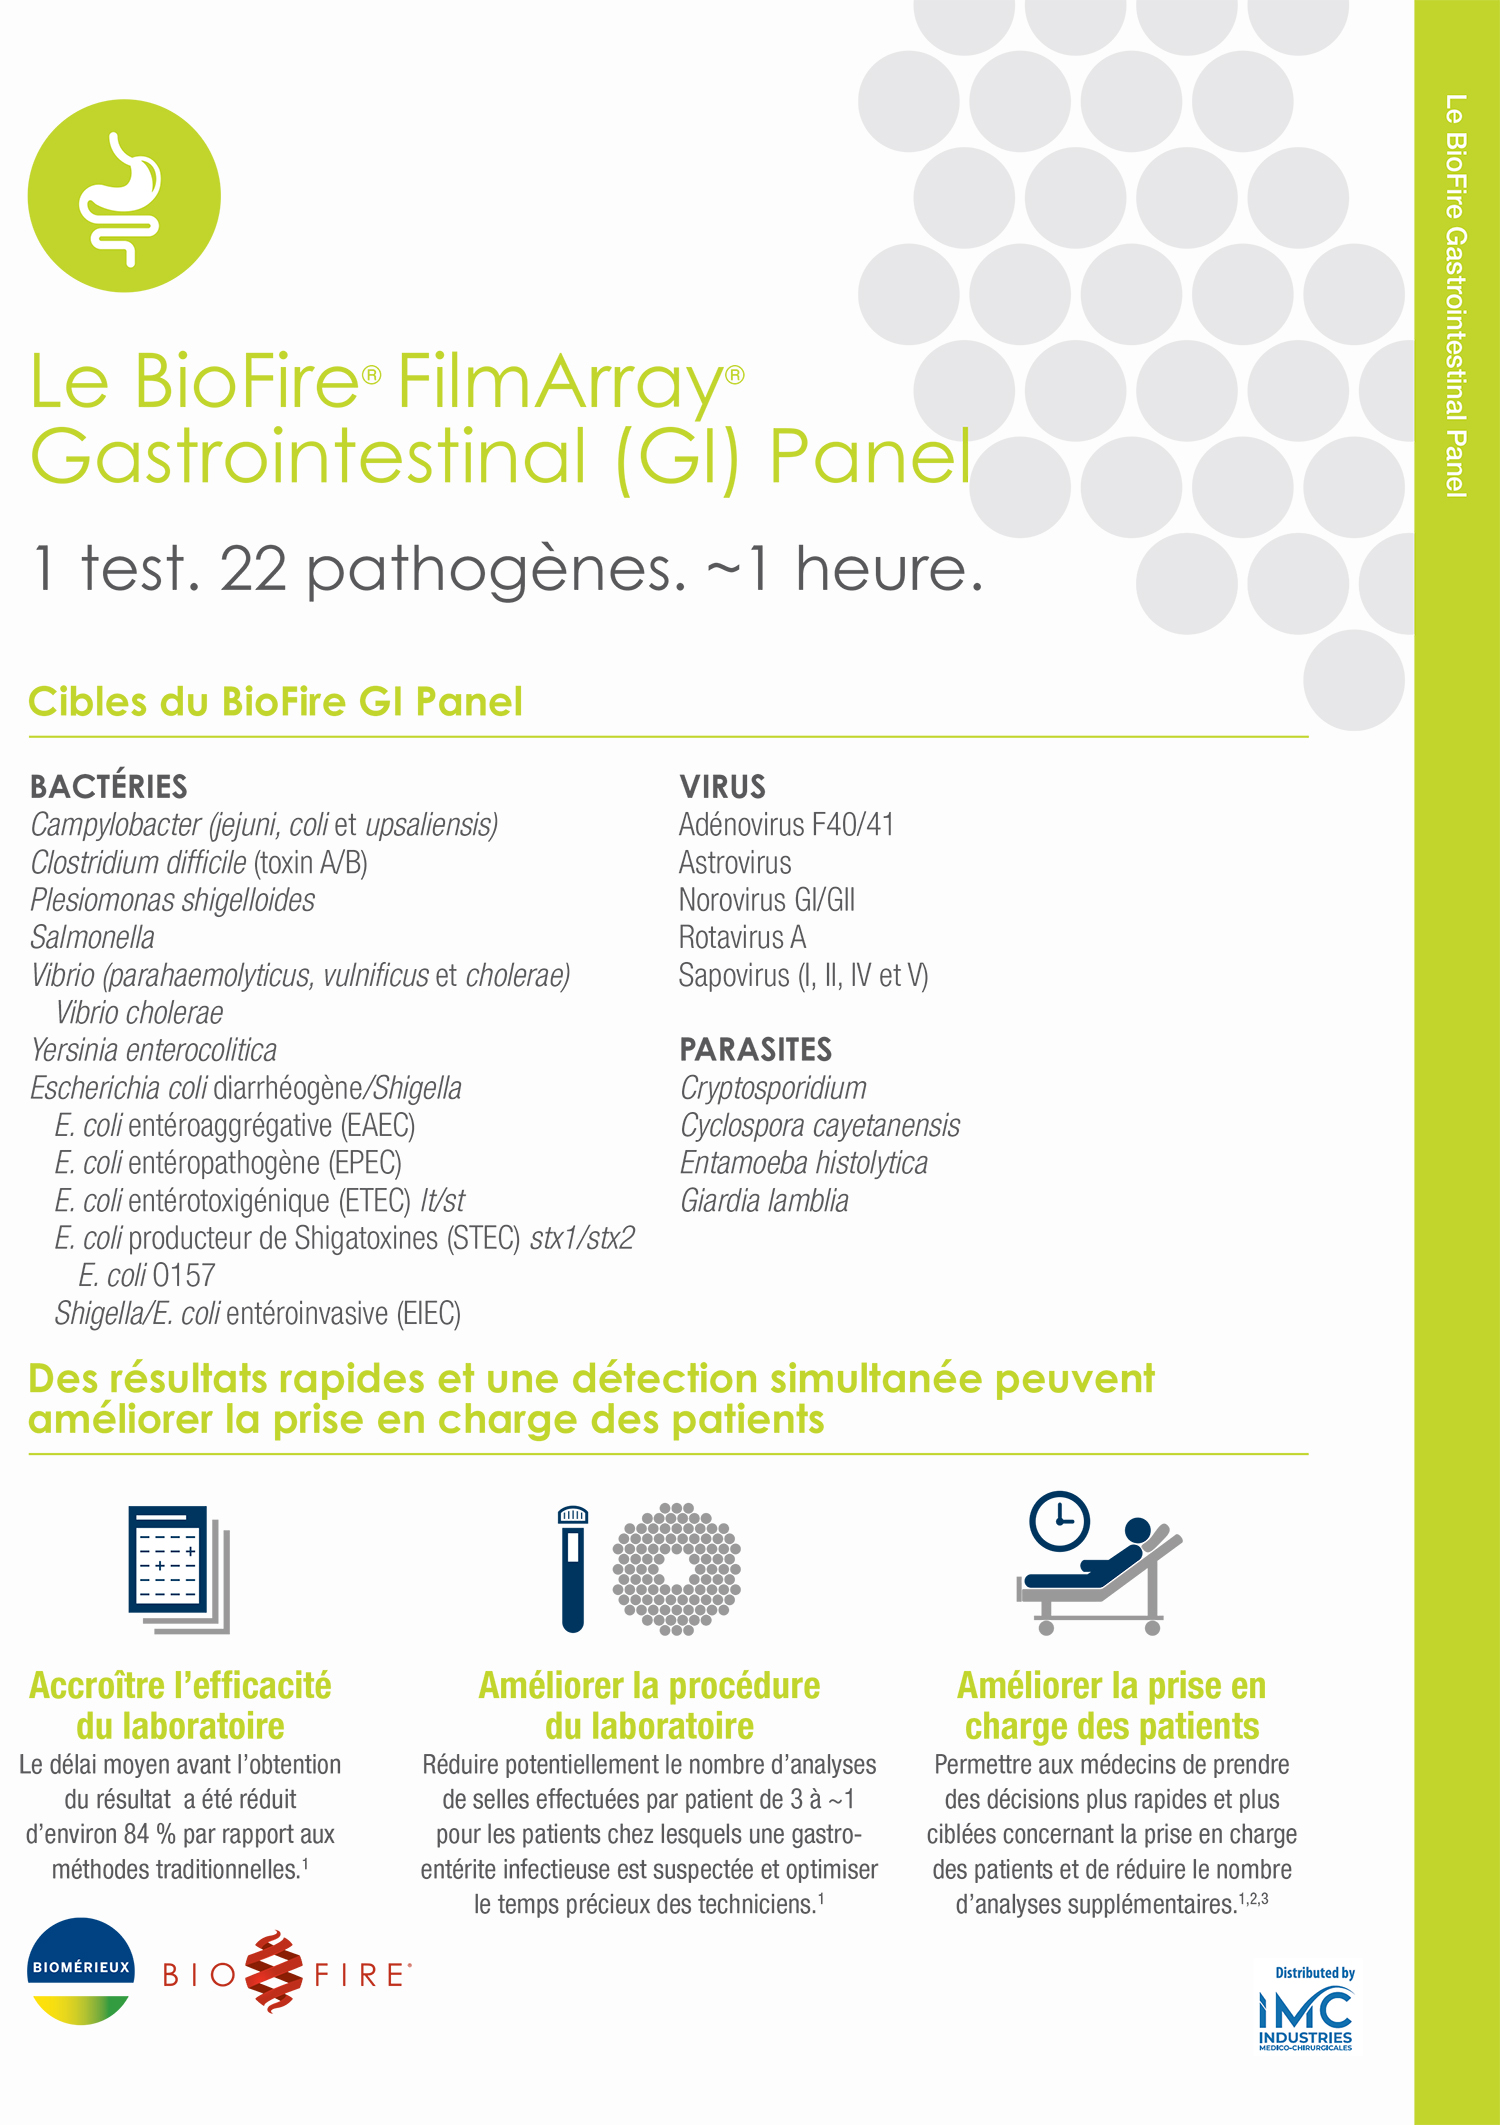 Le BioFire® FilmArray® Gastrointestinal (GI) Panel